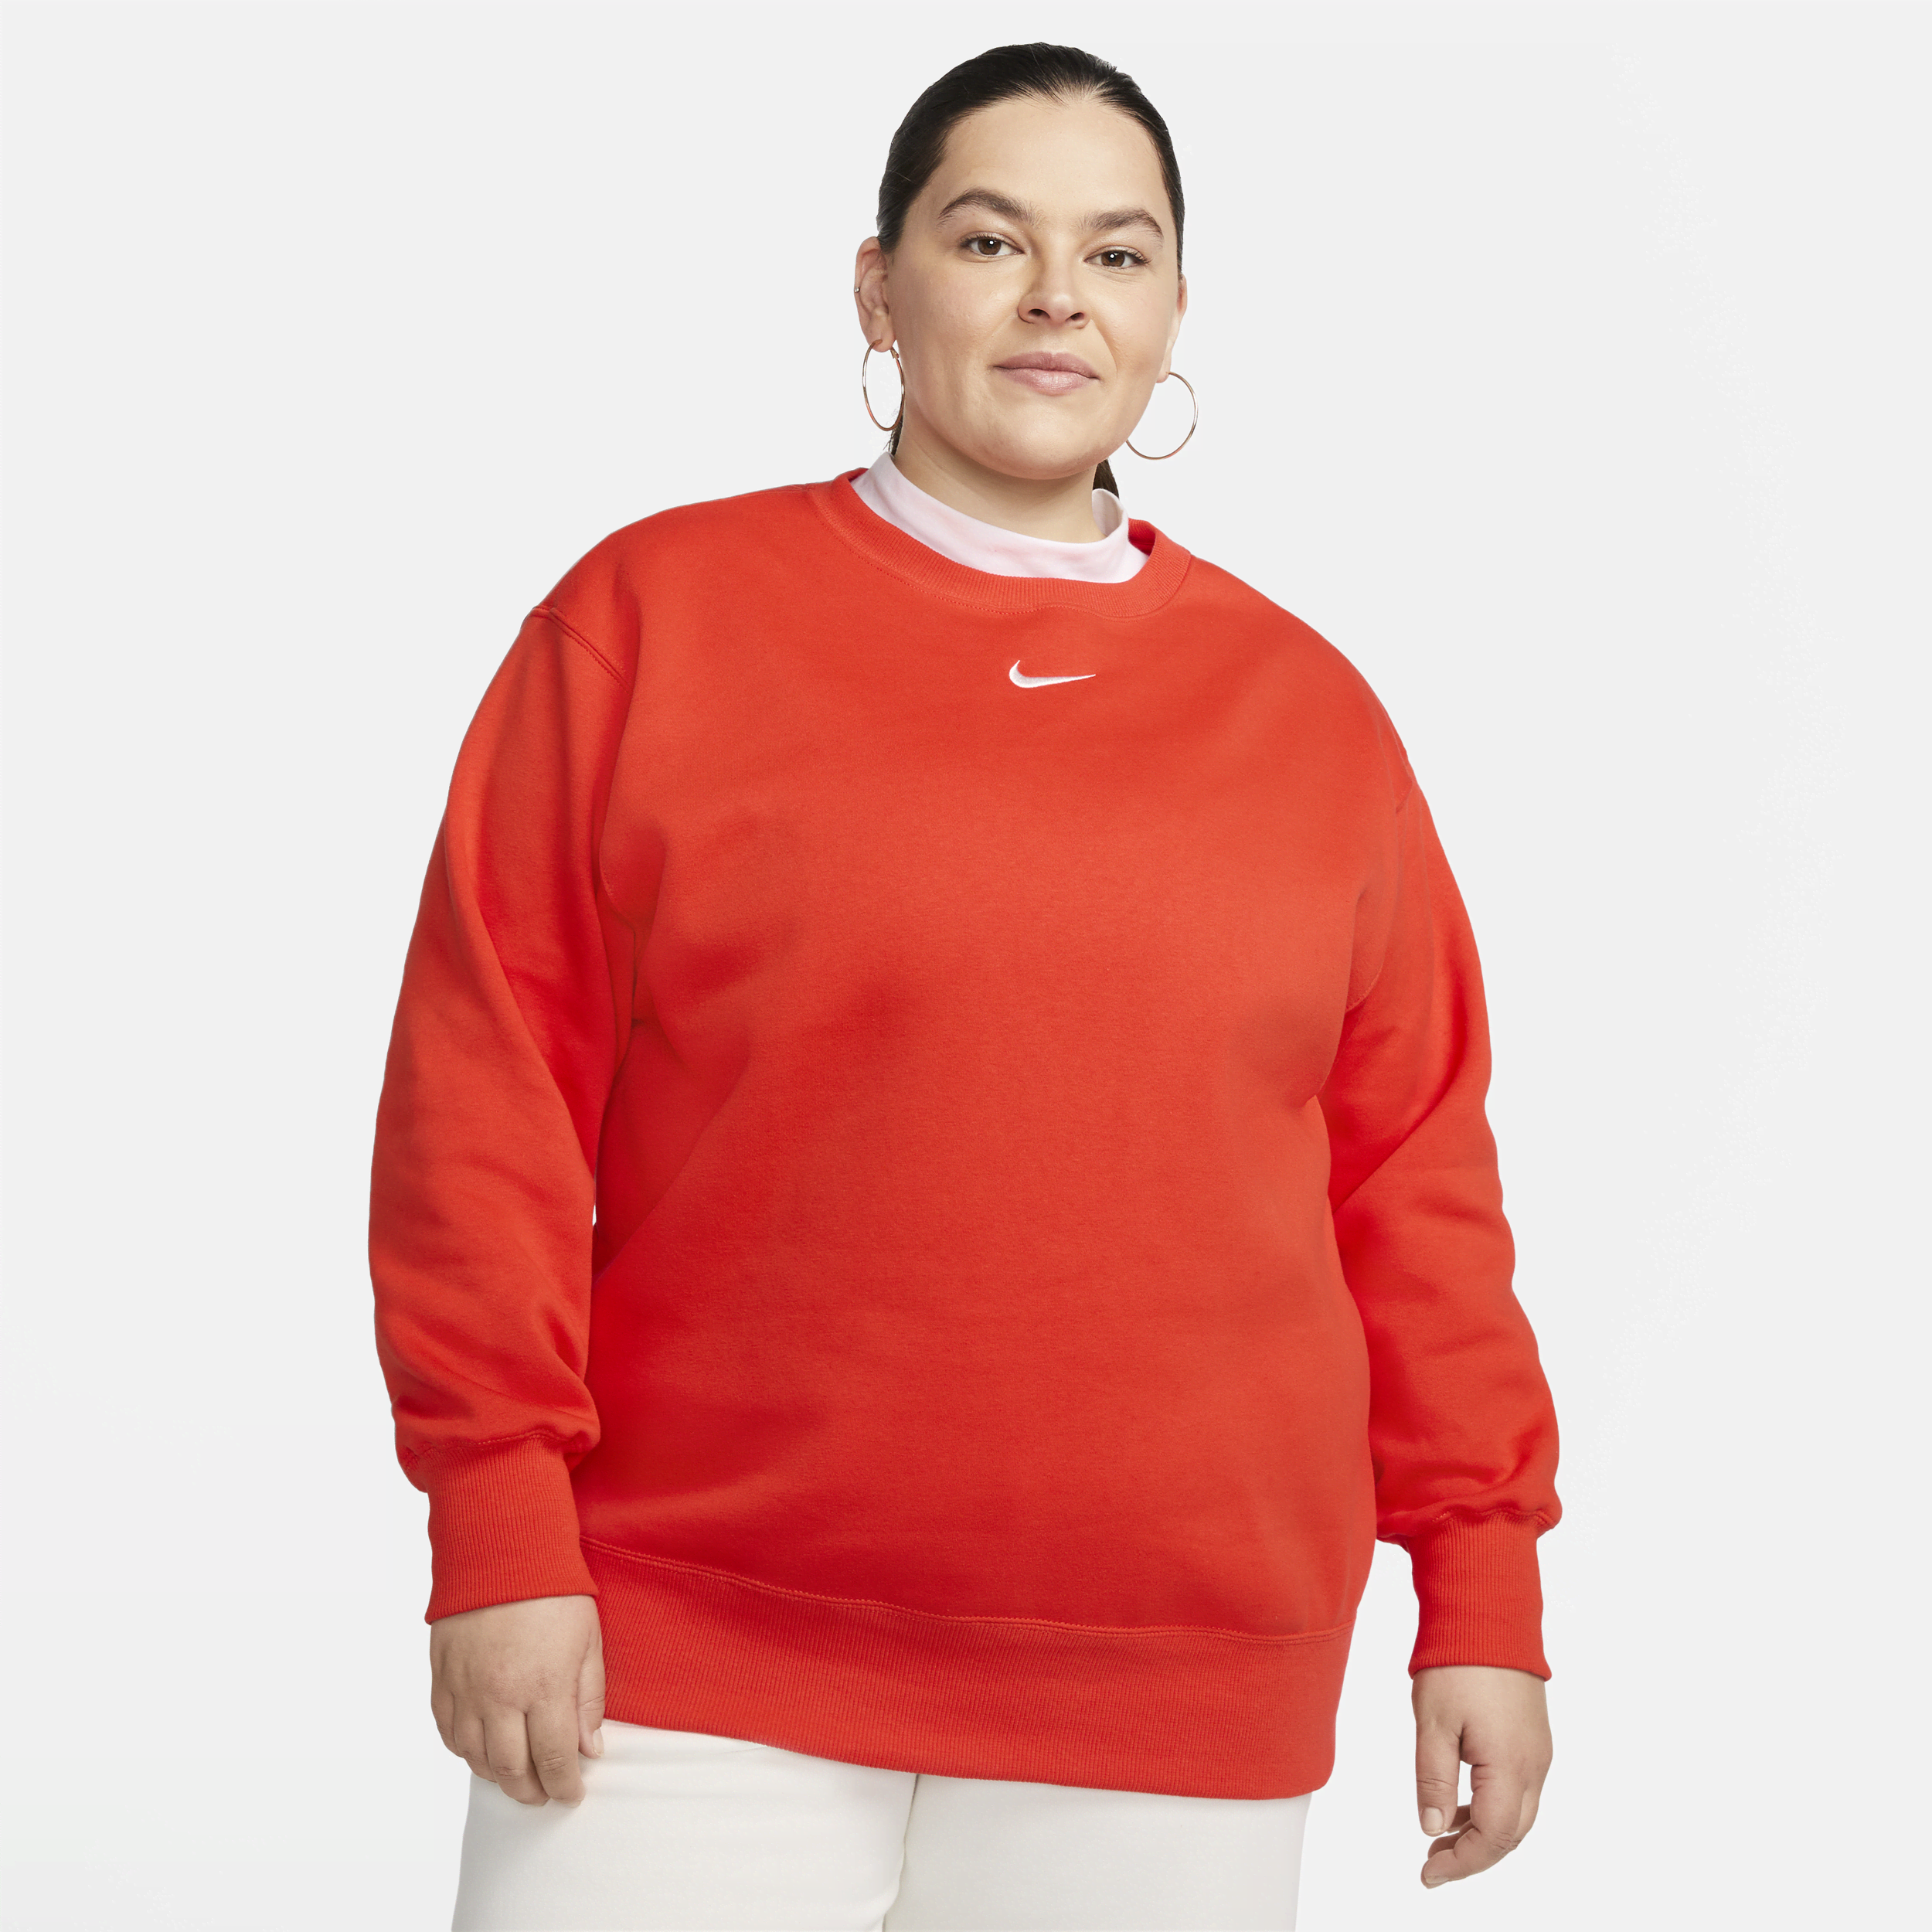 Oversized Nike Sportswear Phoenix Fleece-sweatshirt (plus size) med rund hals til kvinder - rød